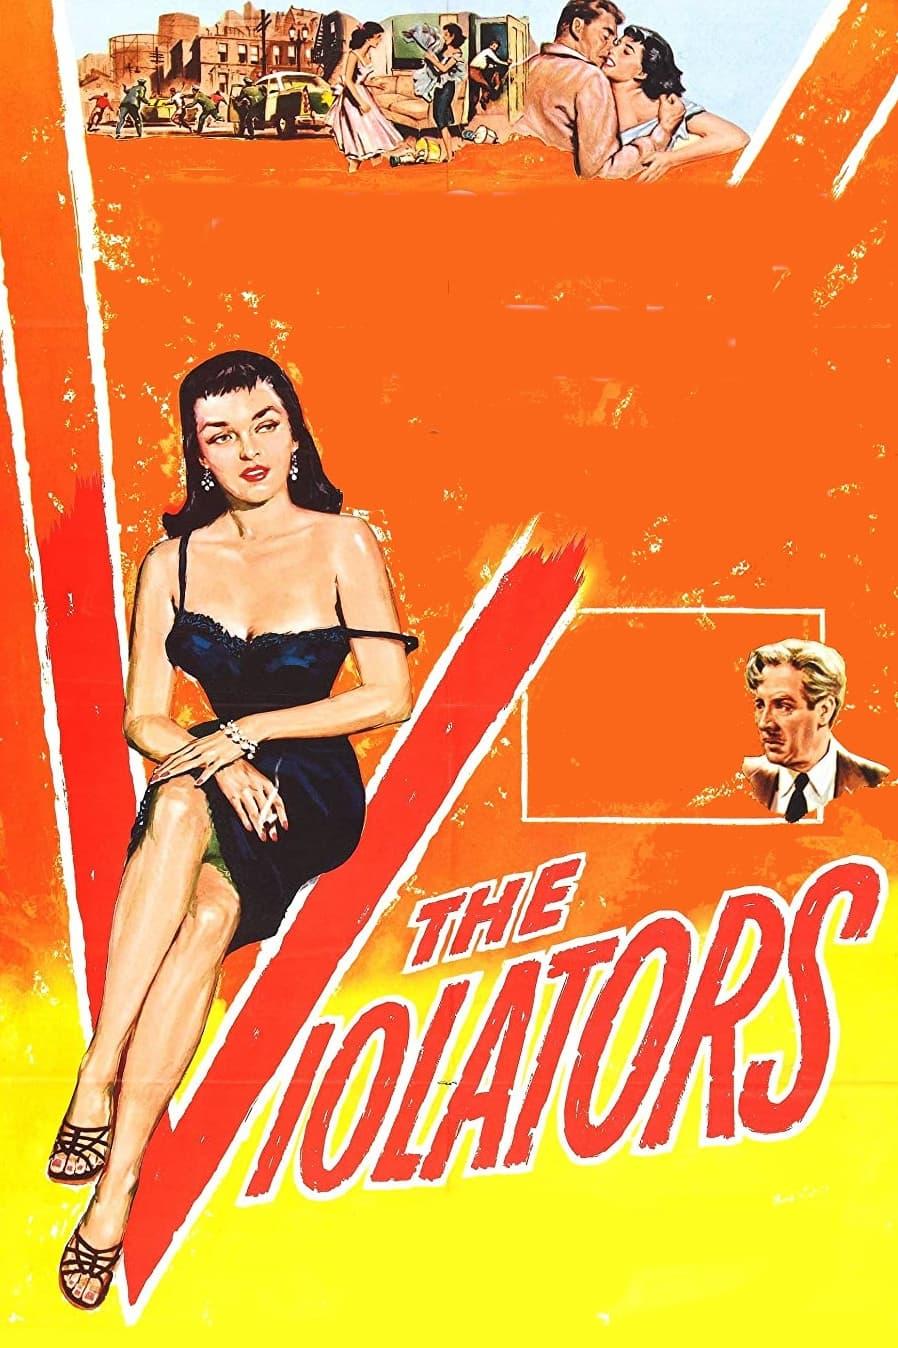 The Violators poster